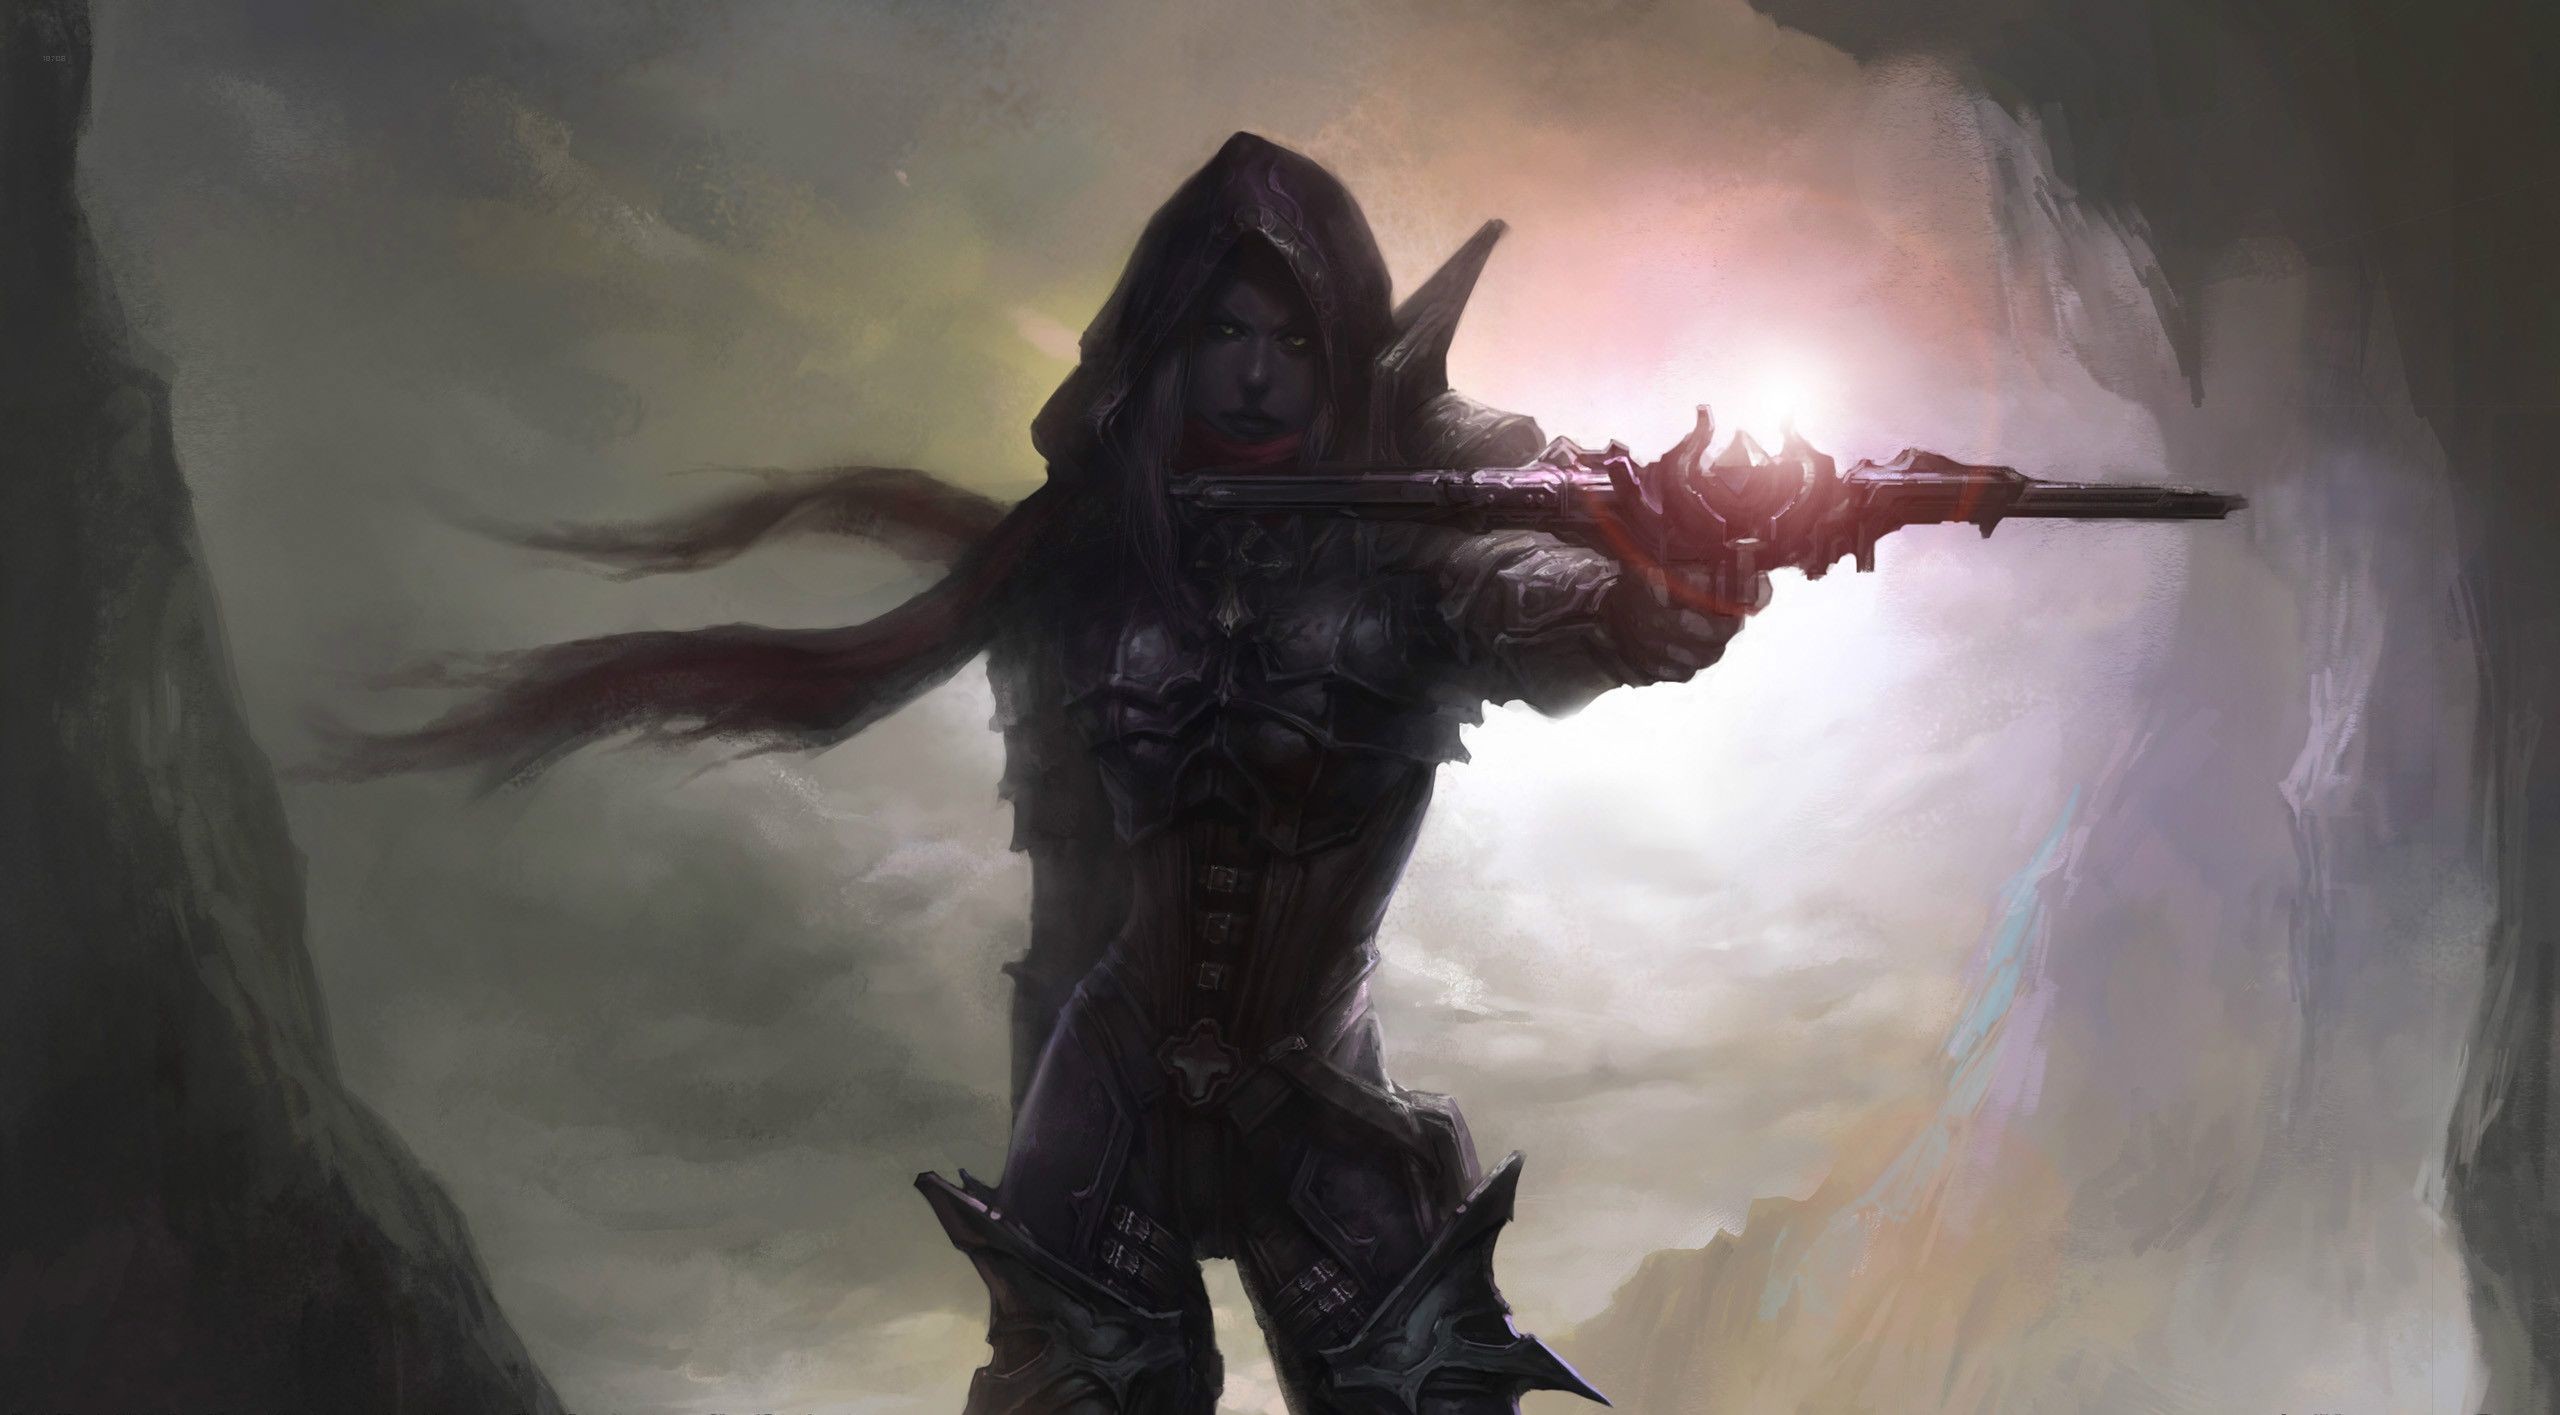 General 2560x1415 Diablo Diablo III video games fantasy art digital art video game girls fantasy girl hoods standing video game art